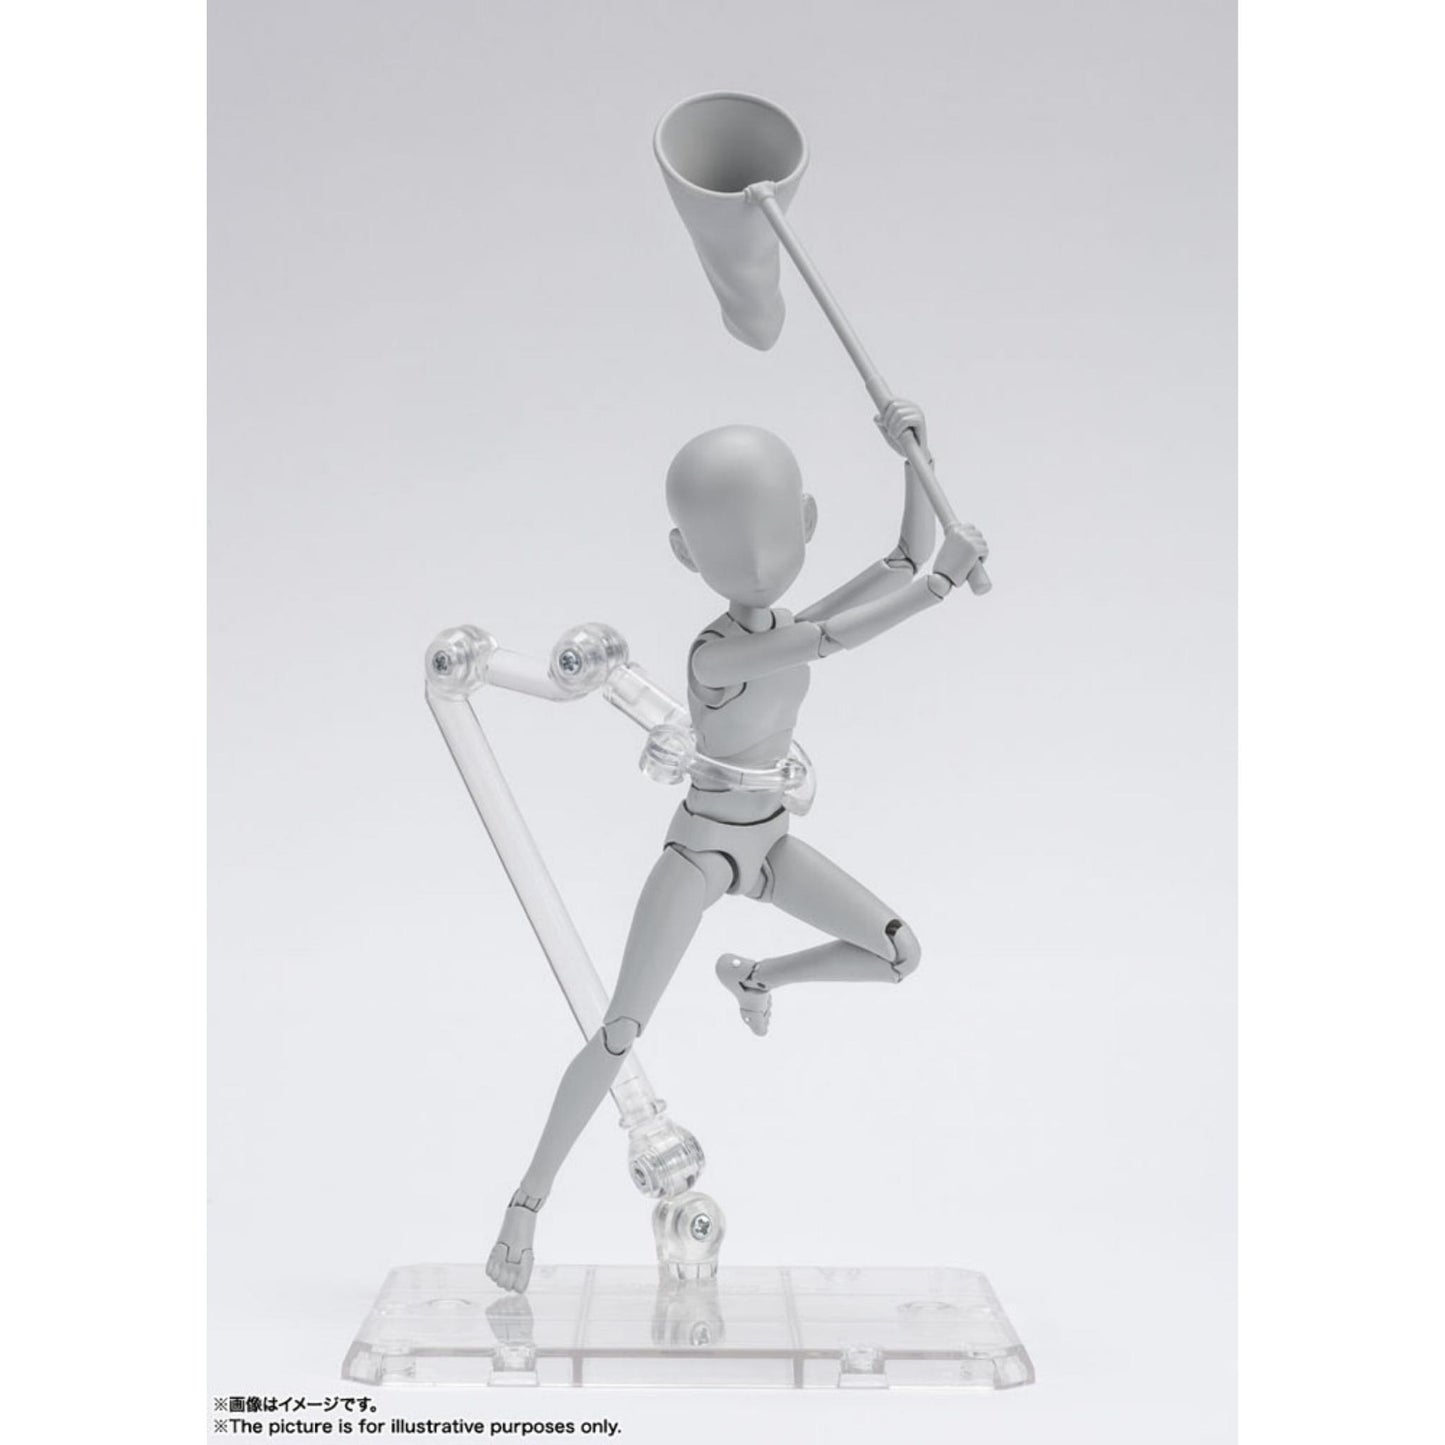 S.H. Figuarts - Body-Kun - Ken Sugimori Edition DX Set (Gray Color Ver.) 13 cm